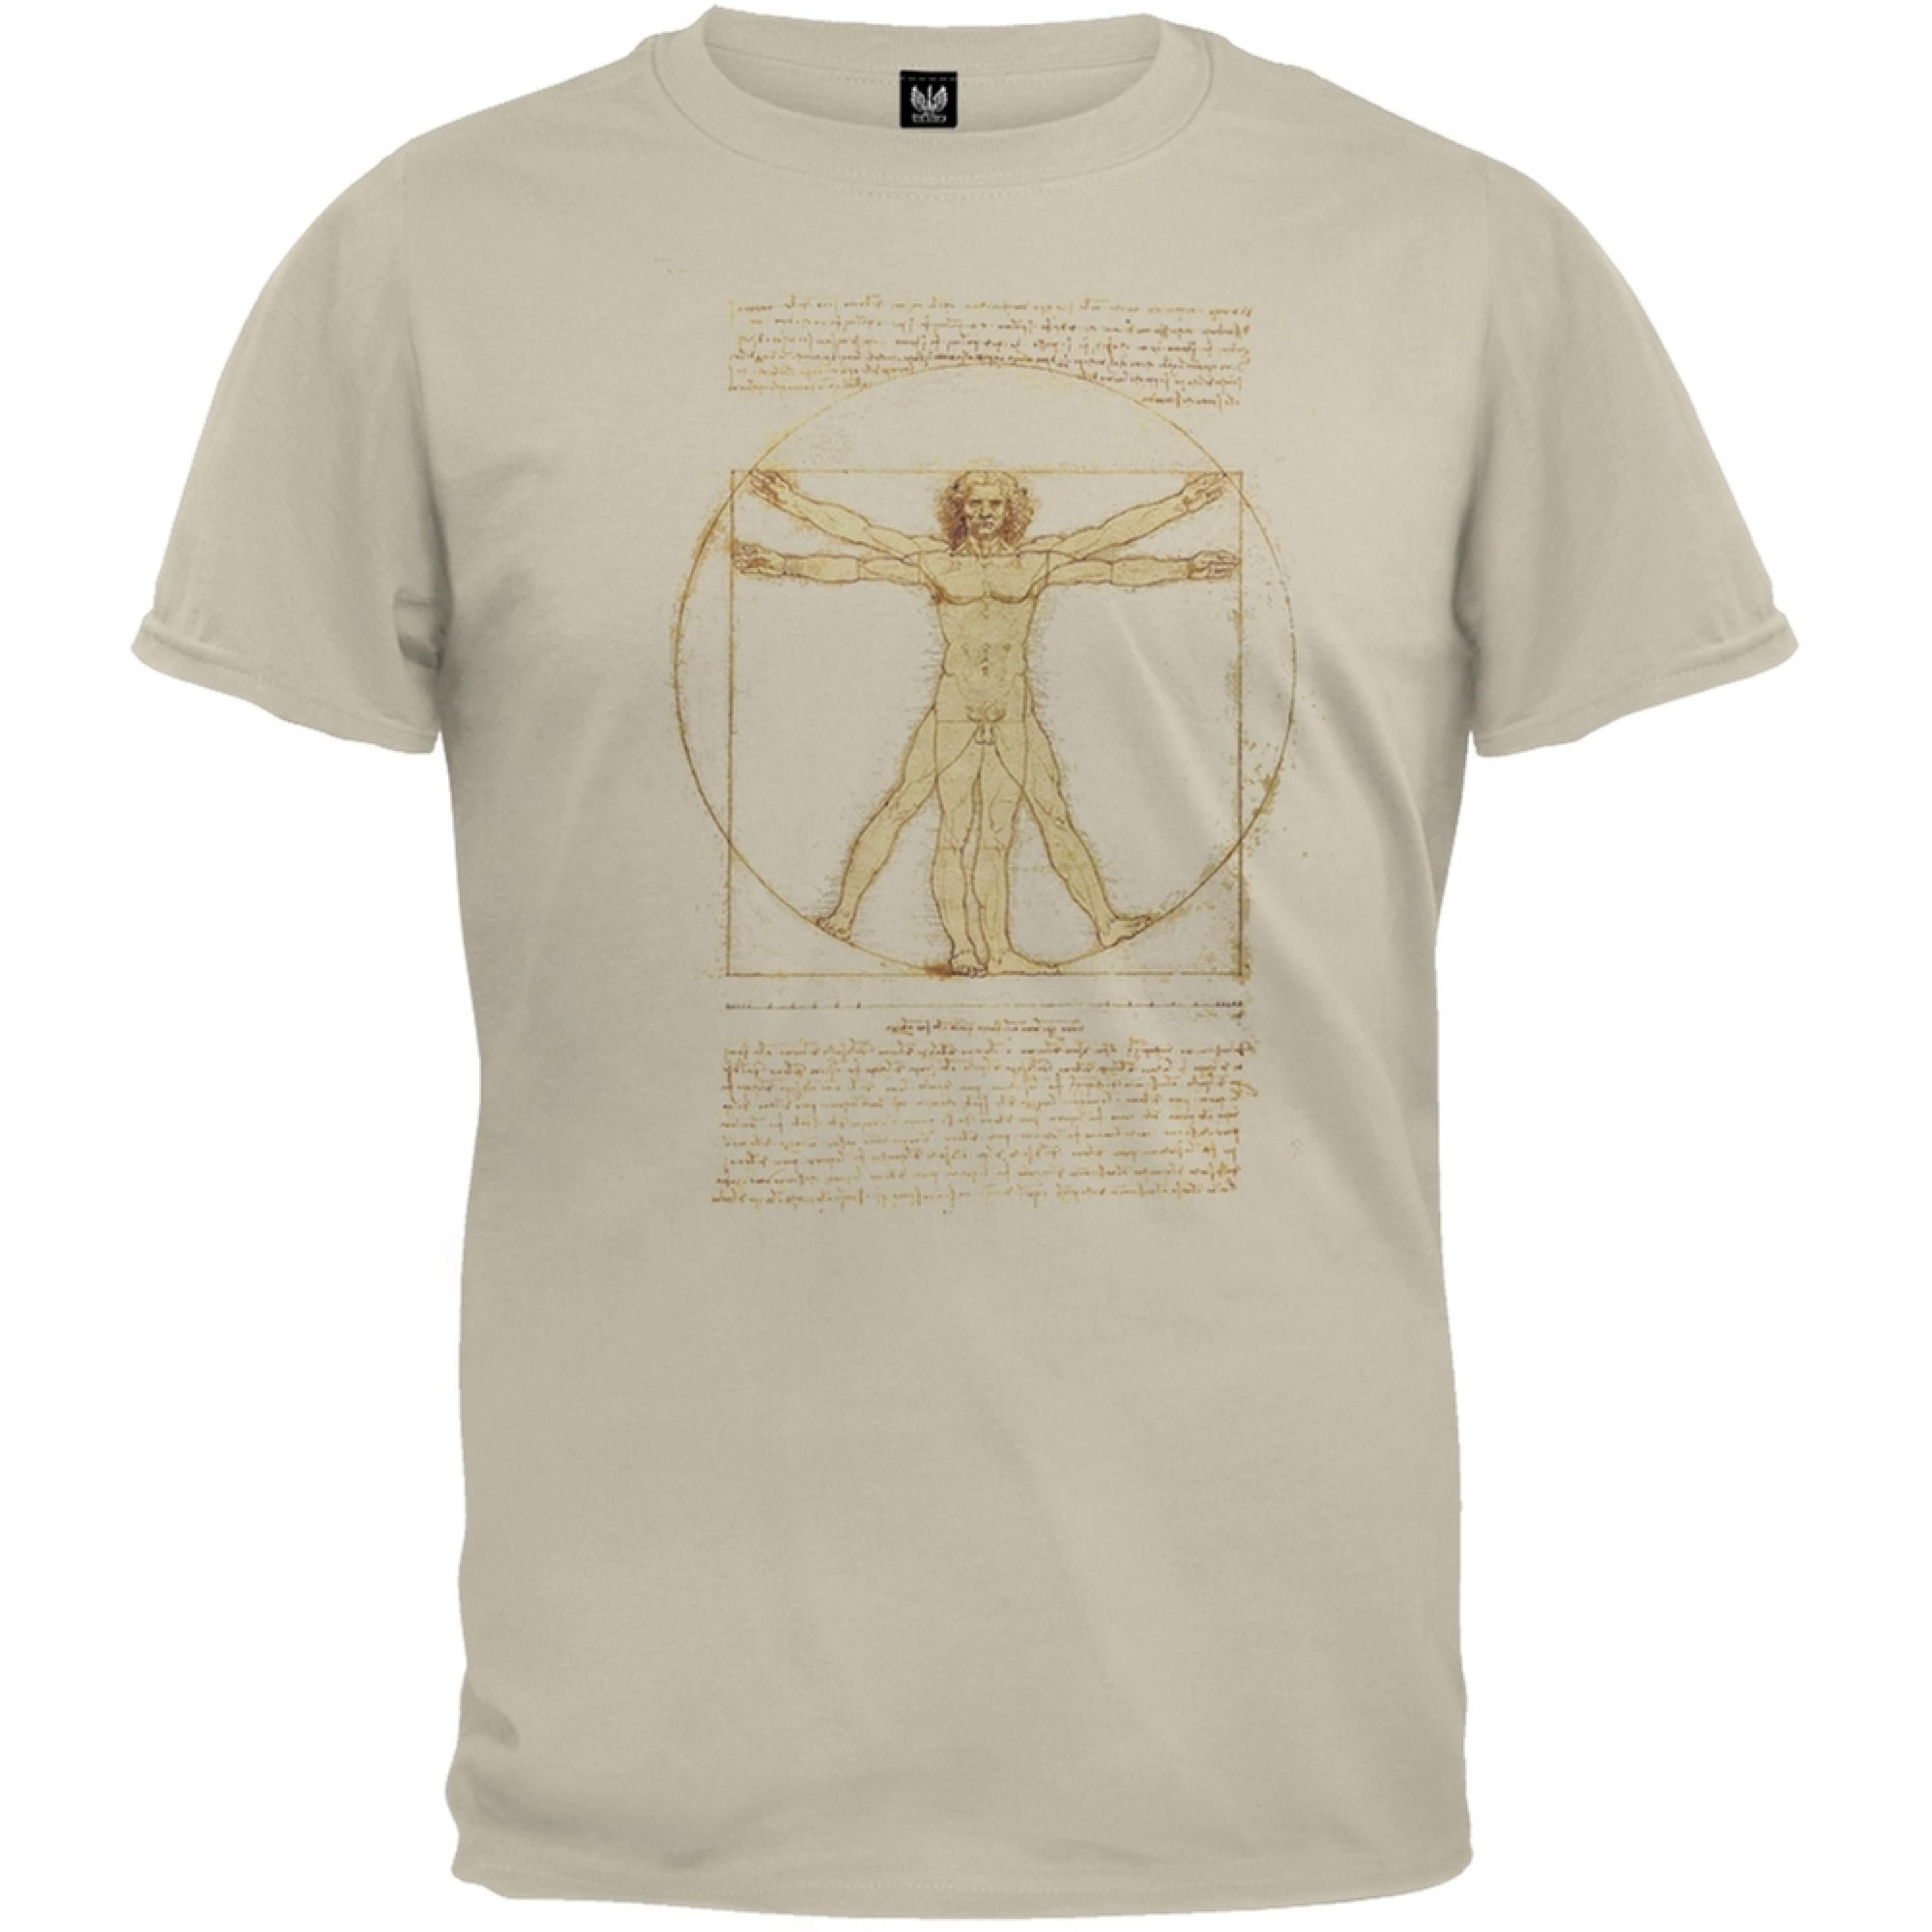 Vitruvian Man T-Shirt - Medium - Walmart.com